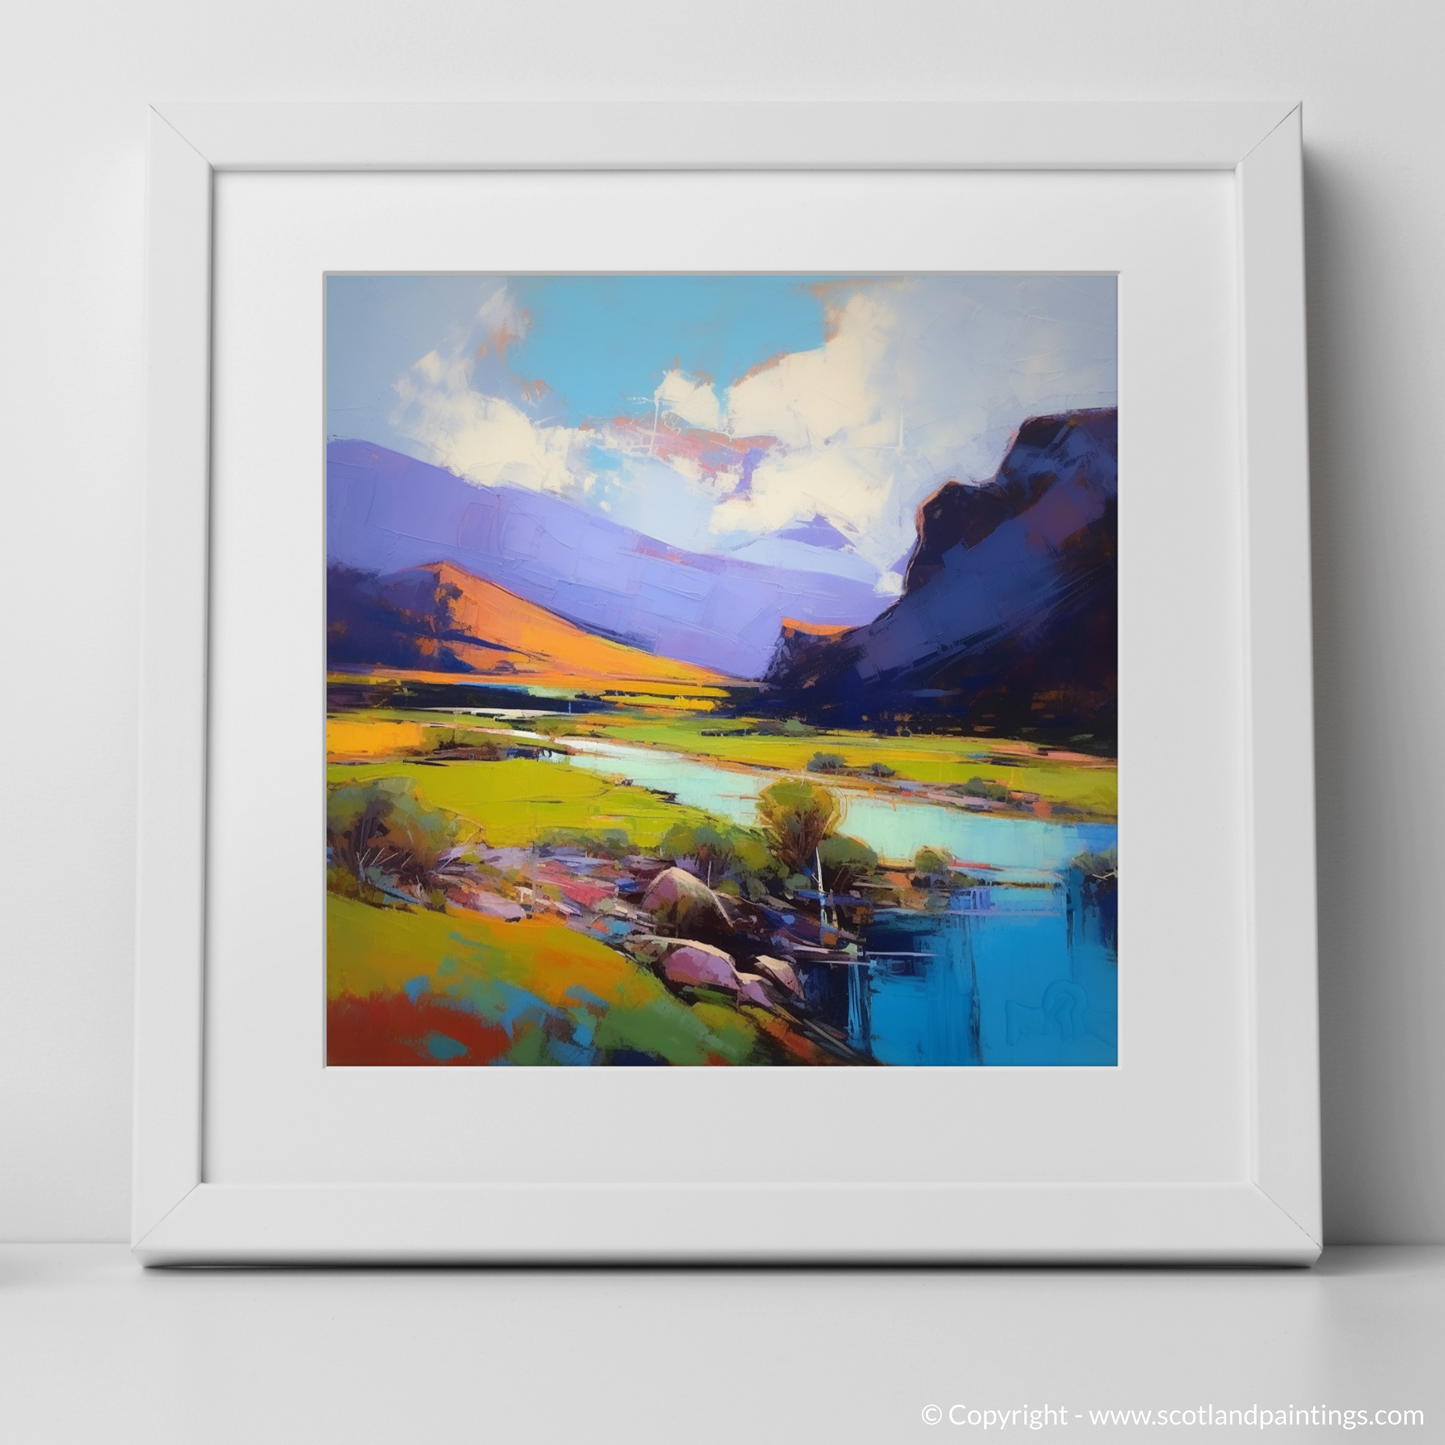 Summer Embrace of Glen Shiel: An Expressionist Ode to the Highlands